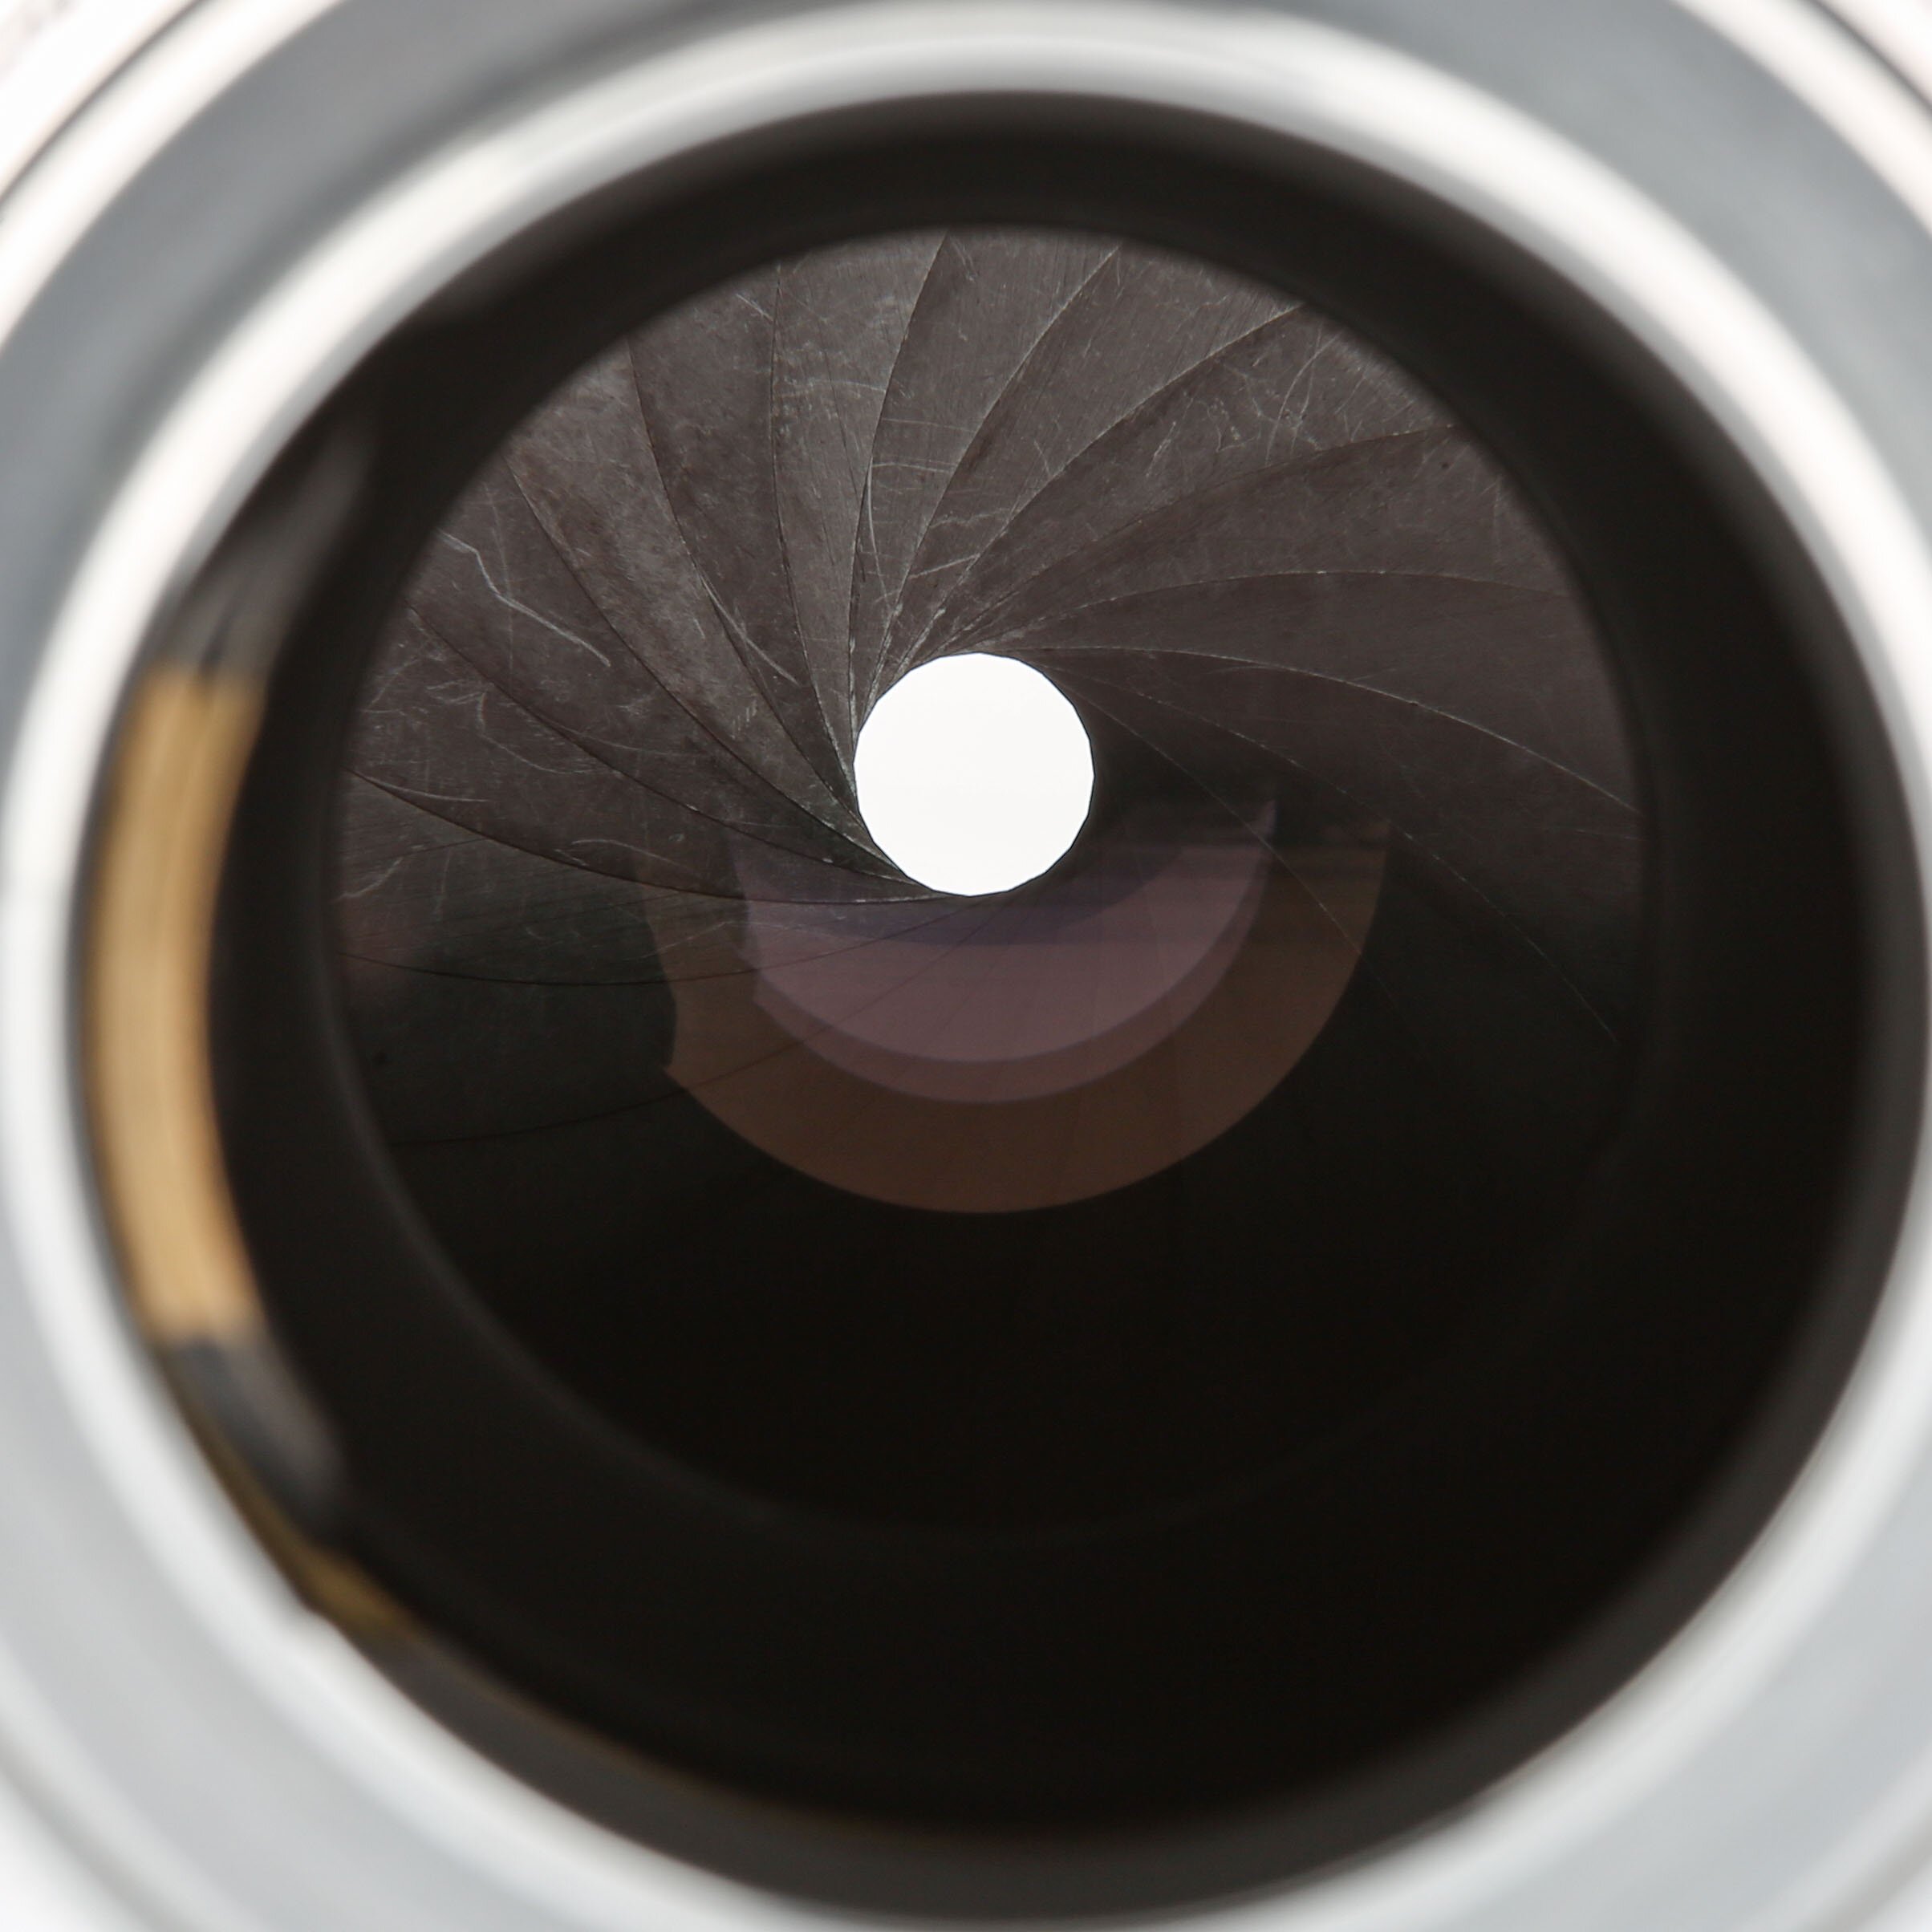 Canon Lens 1,9/85mm Leica M39